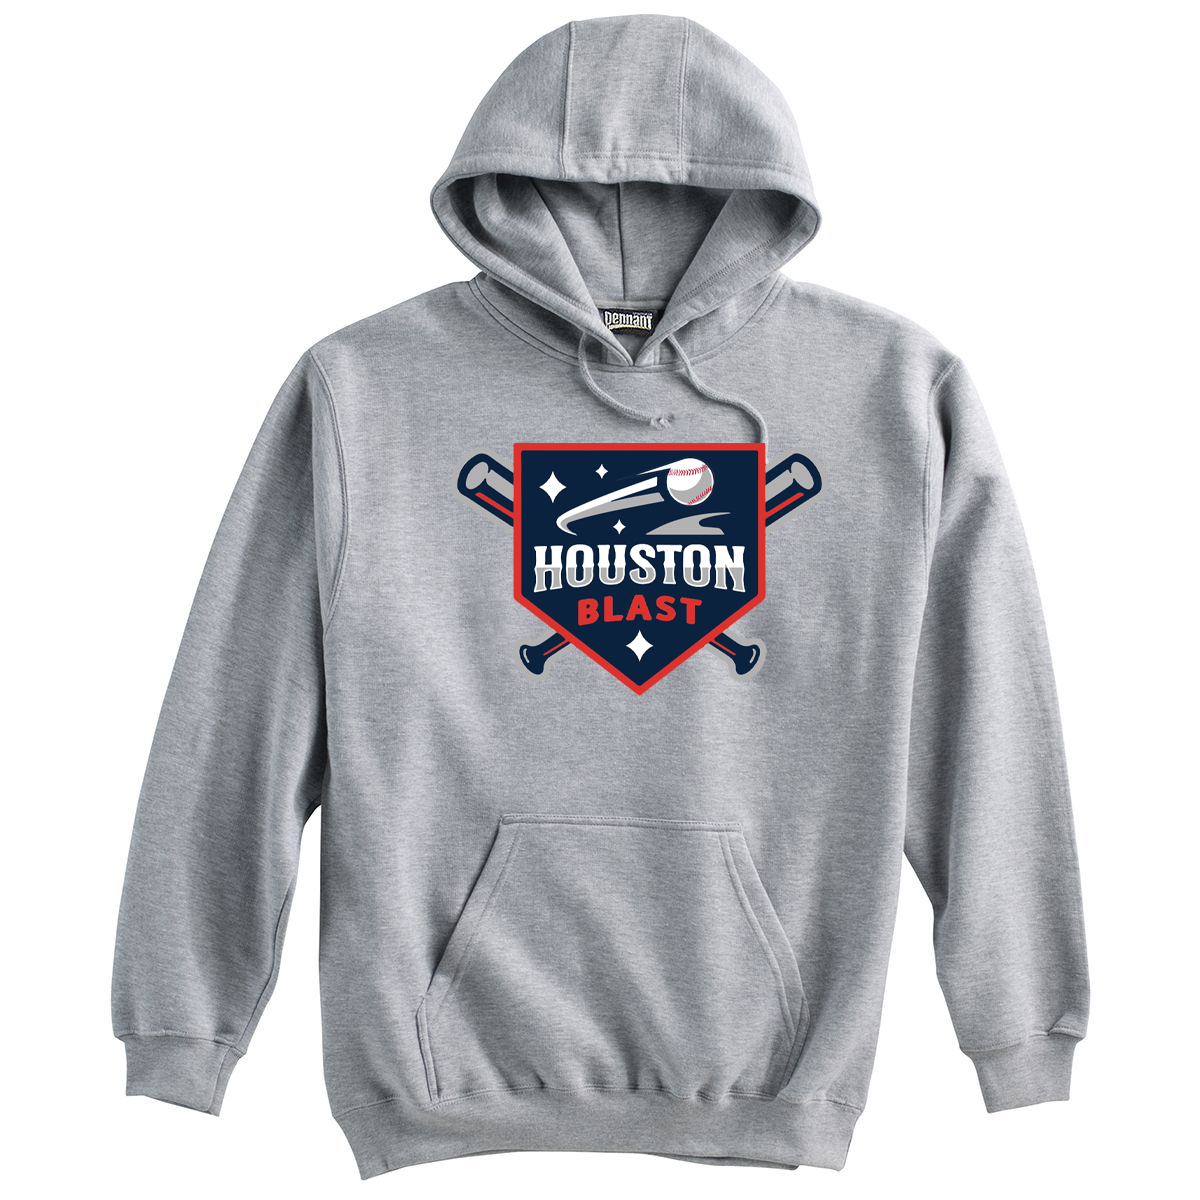 Houston Blast Baseball Sweatshirt